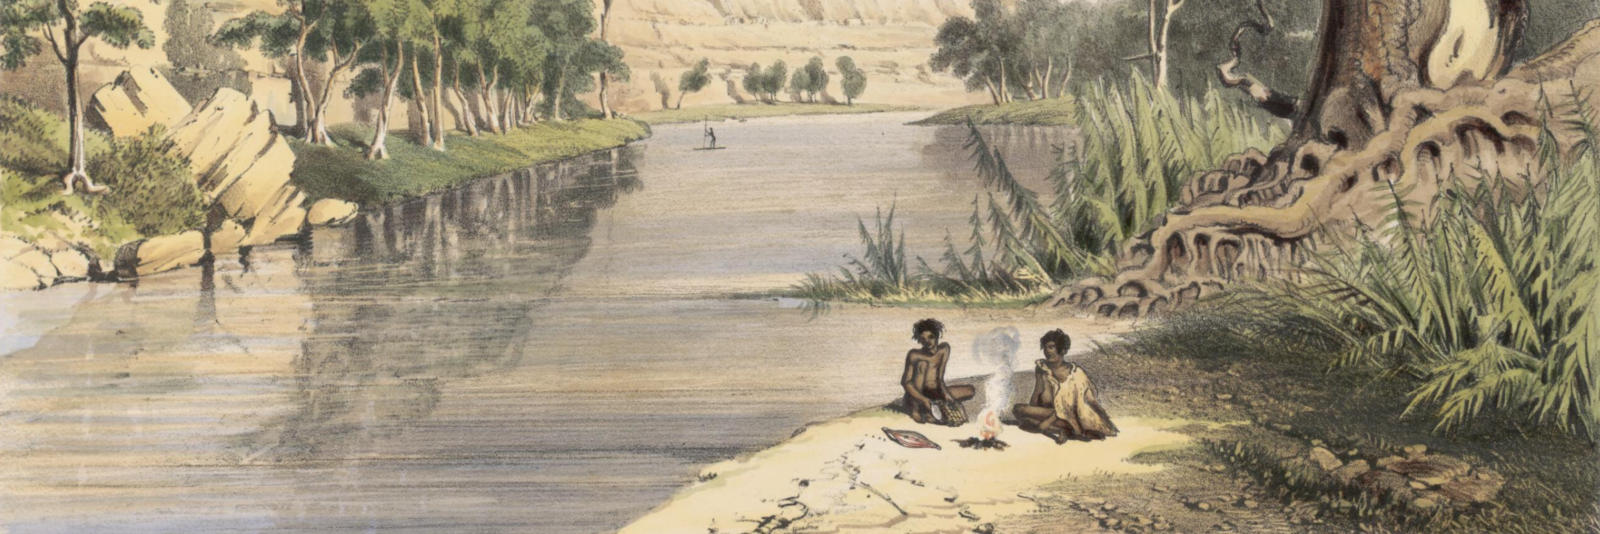 Print of Aboriginal Australians beside the Murray River